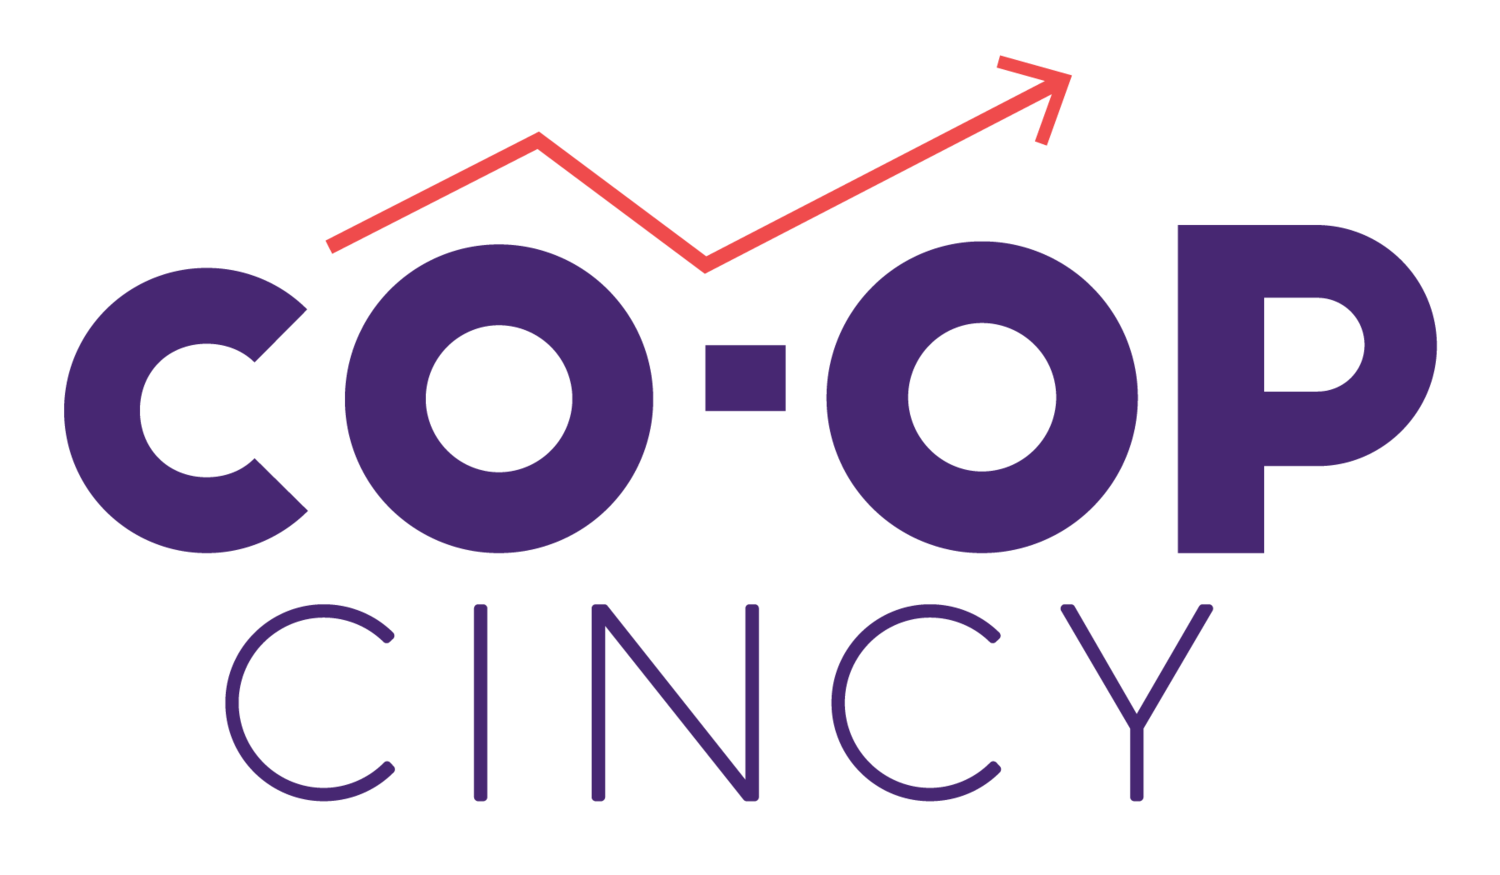 This is the Co-Op Cincy logo.